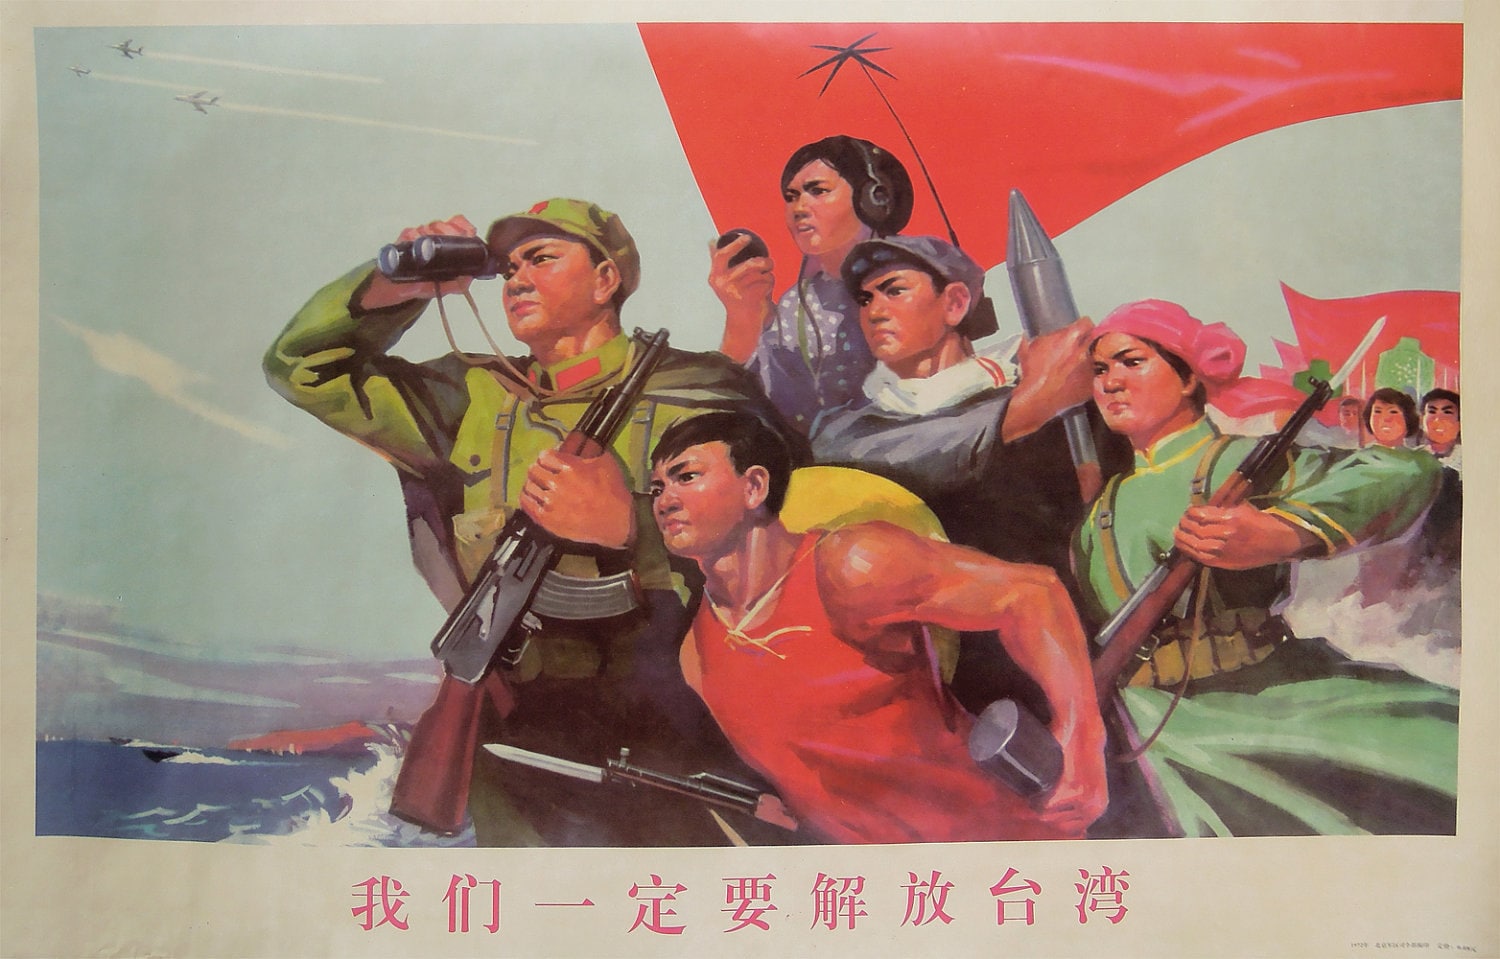 communist china essay